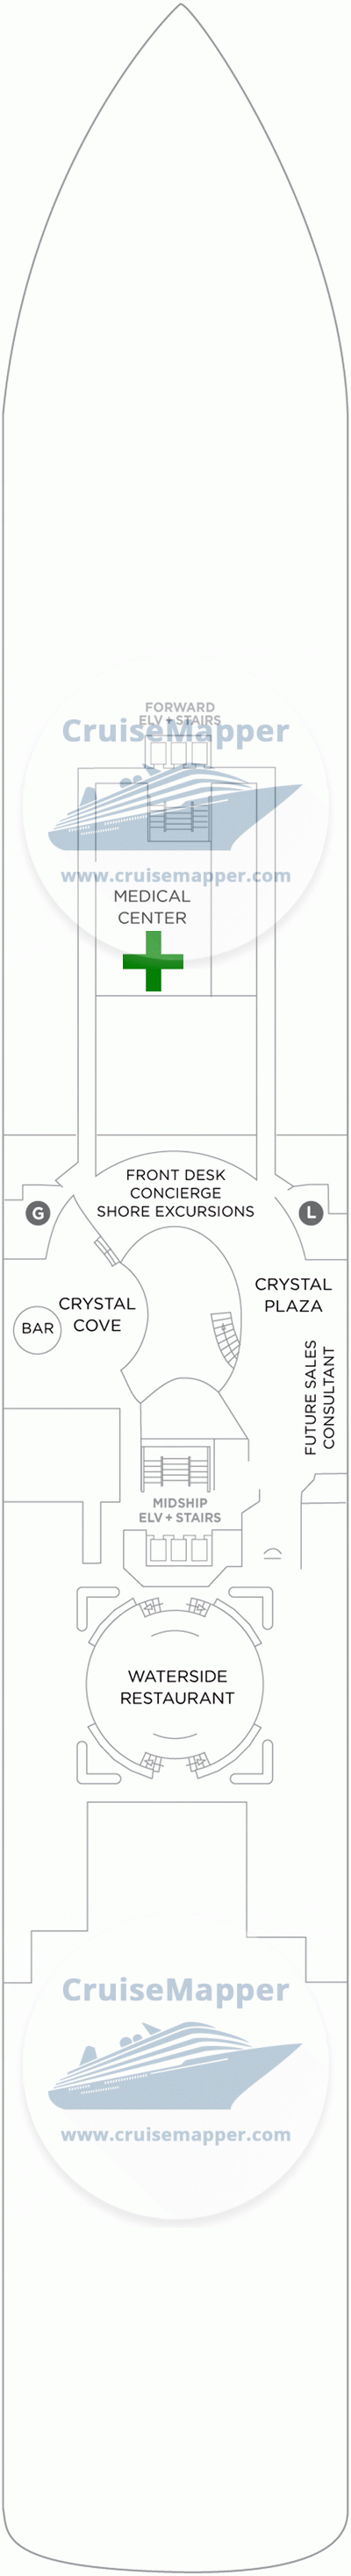 Crystal Serenity Deck 05 - Crystal-Dining